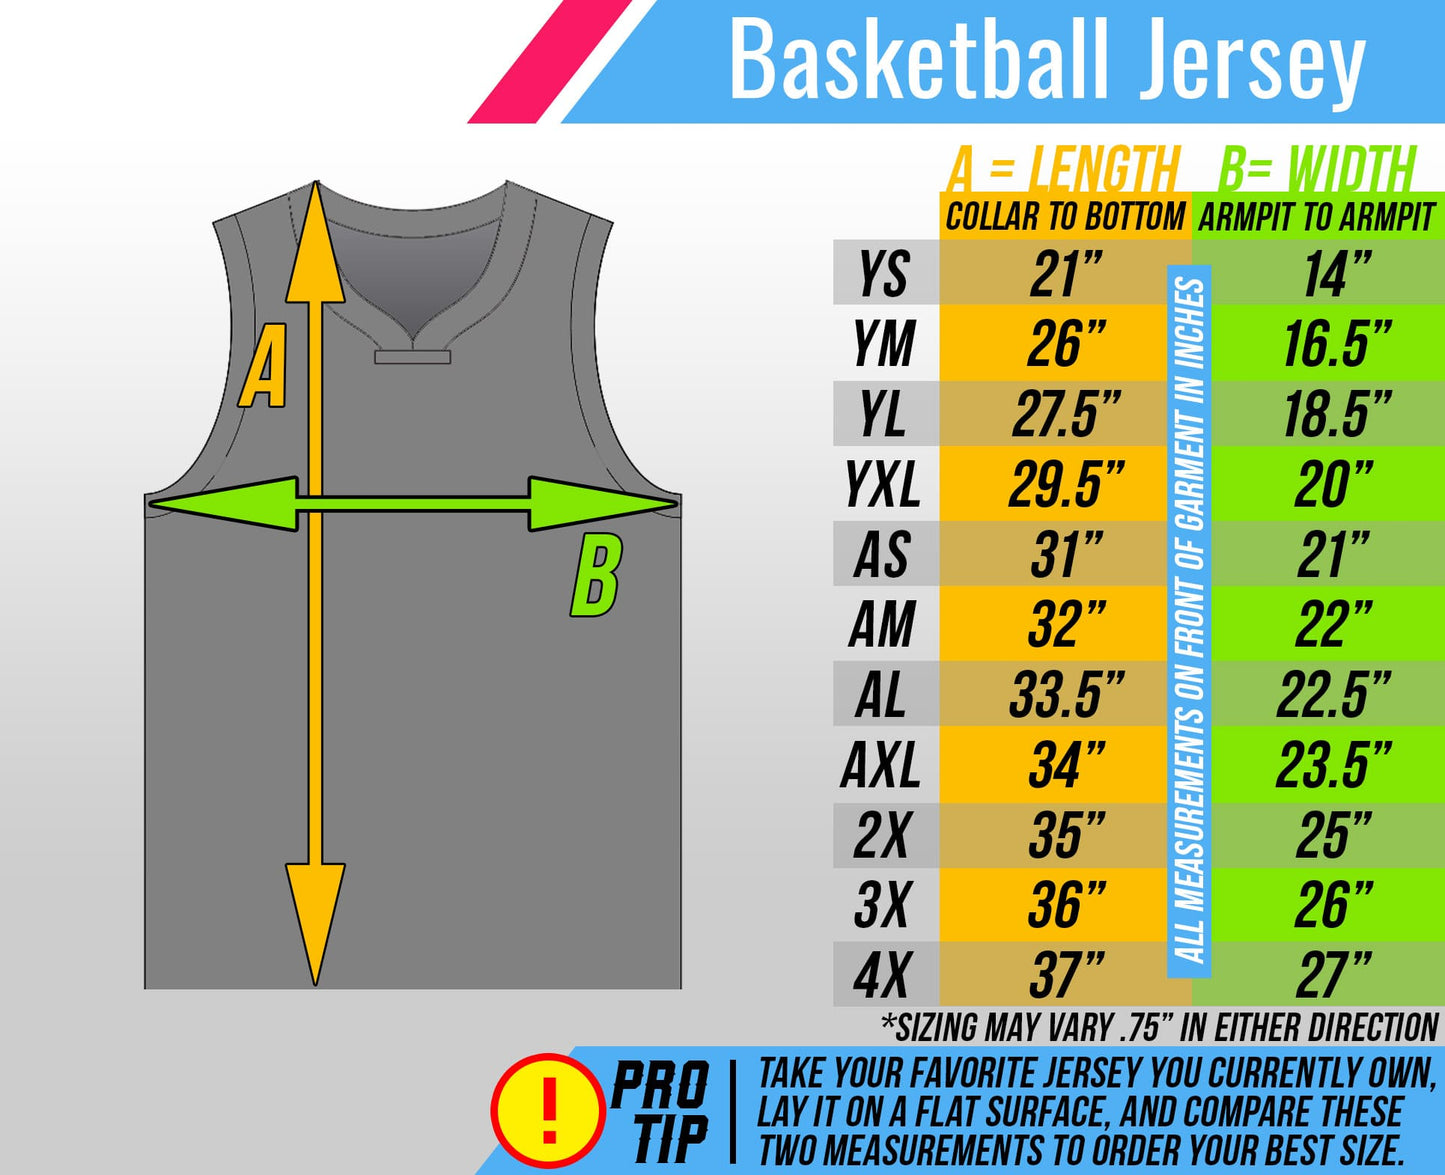 flint tropics, semi-pro, jackie moon custom basketball jersey, flint tropics basketball